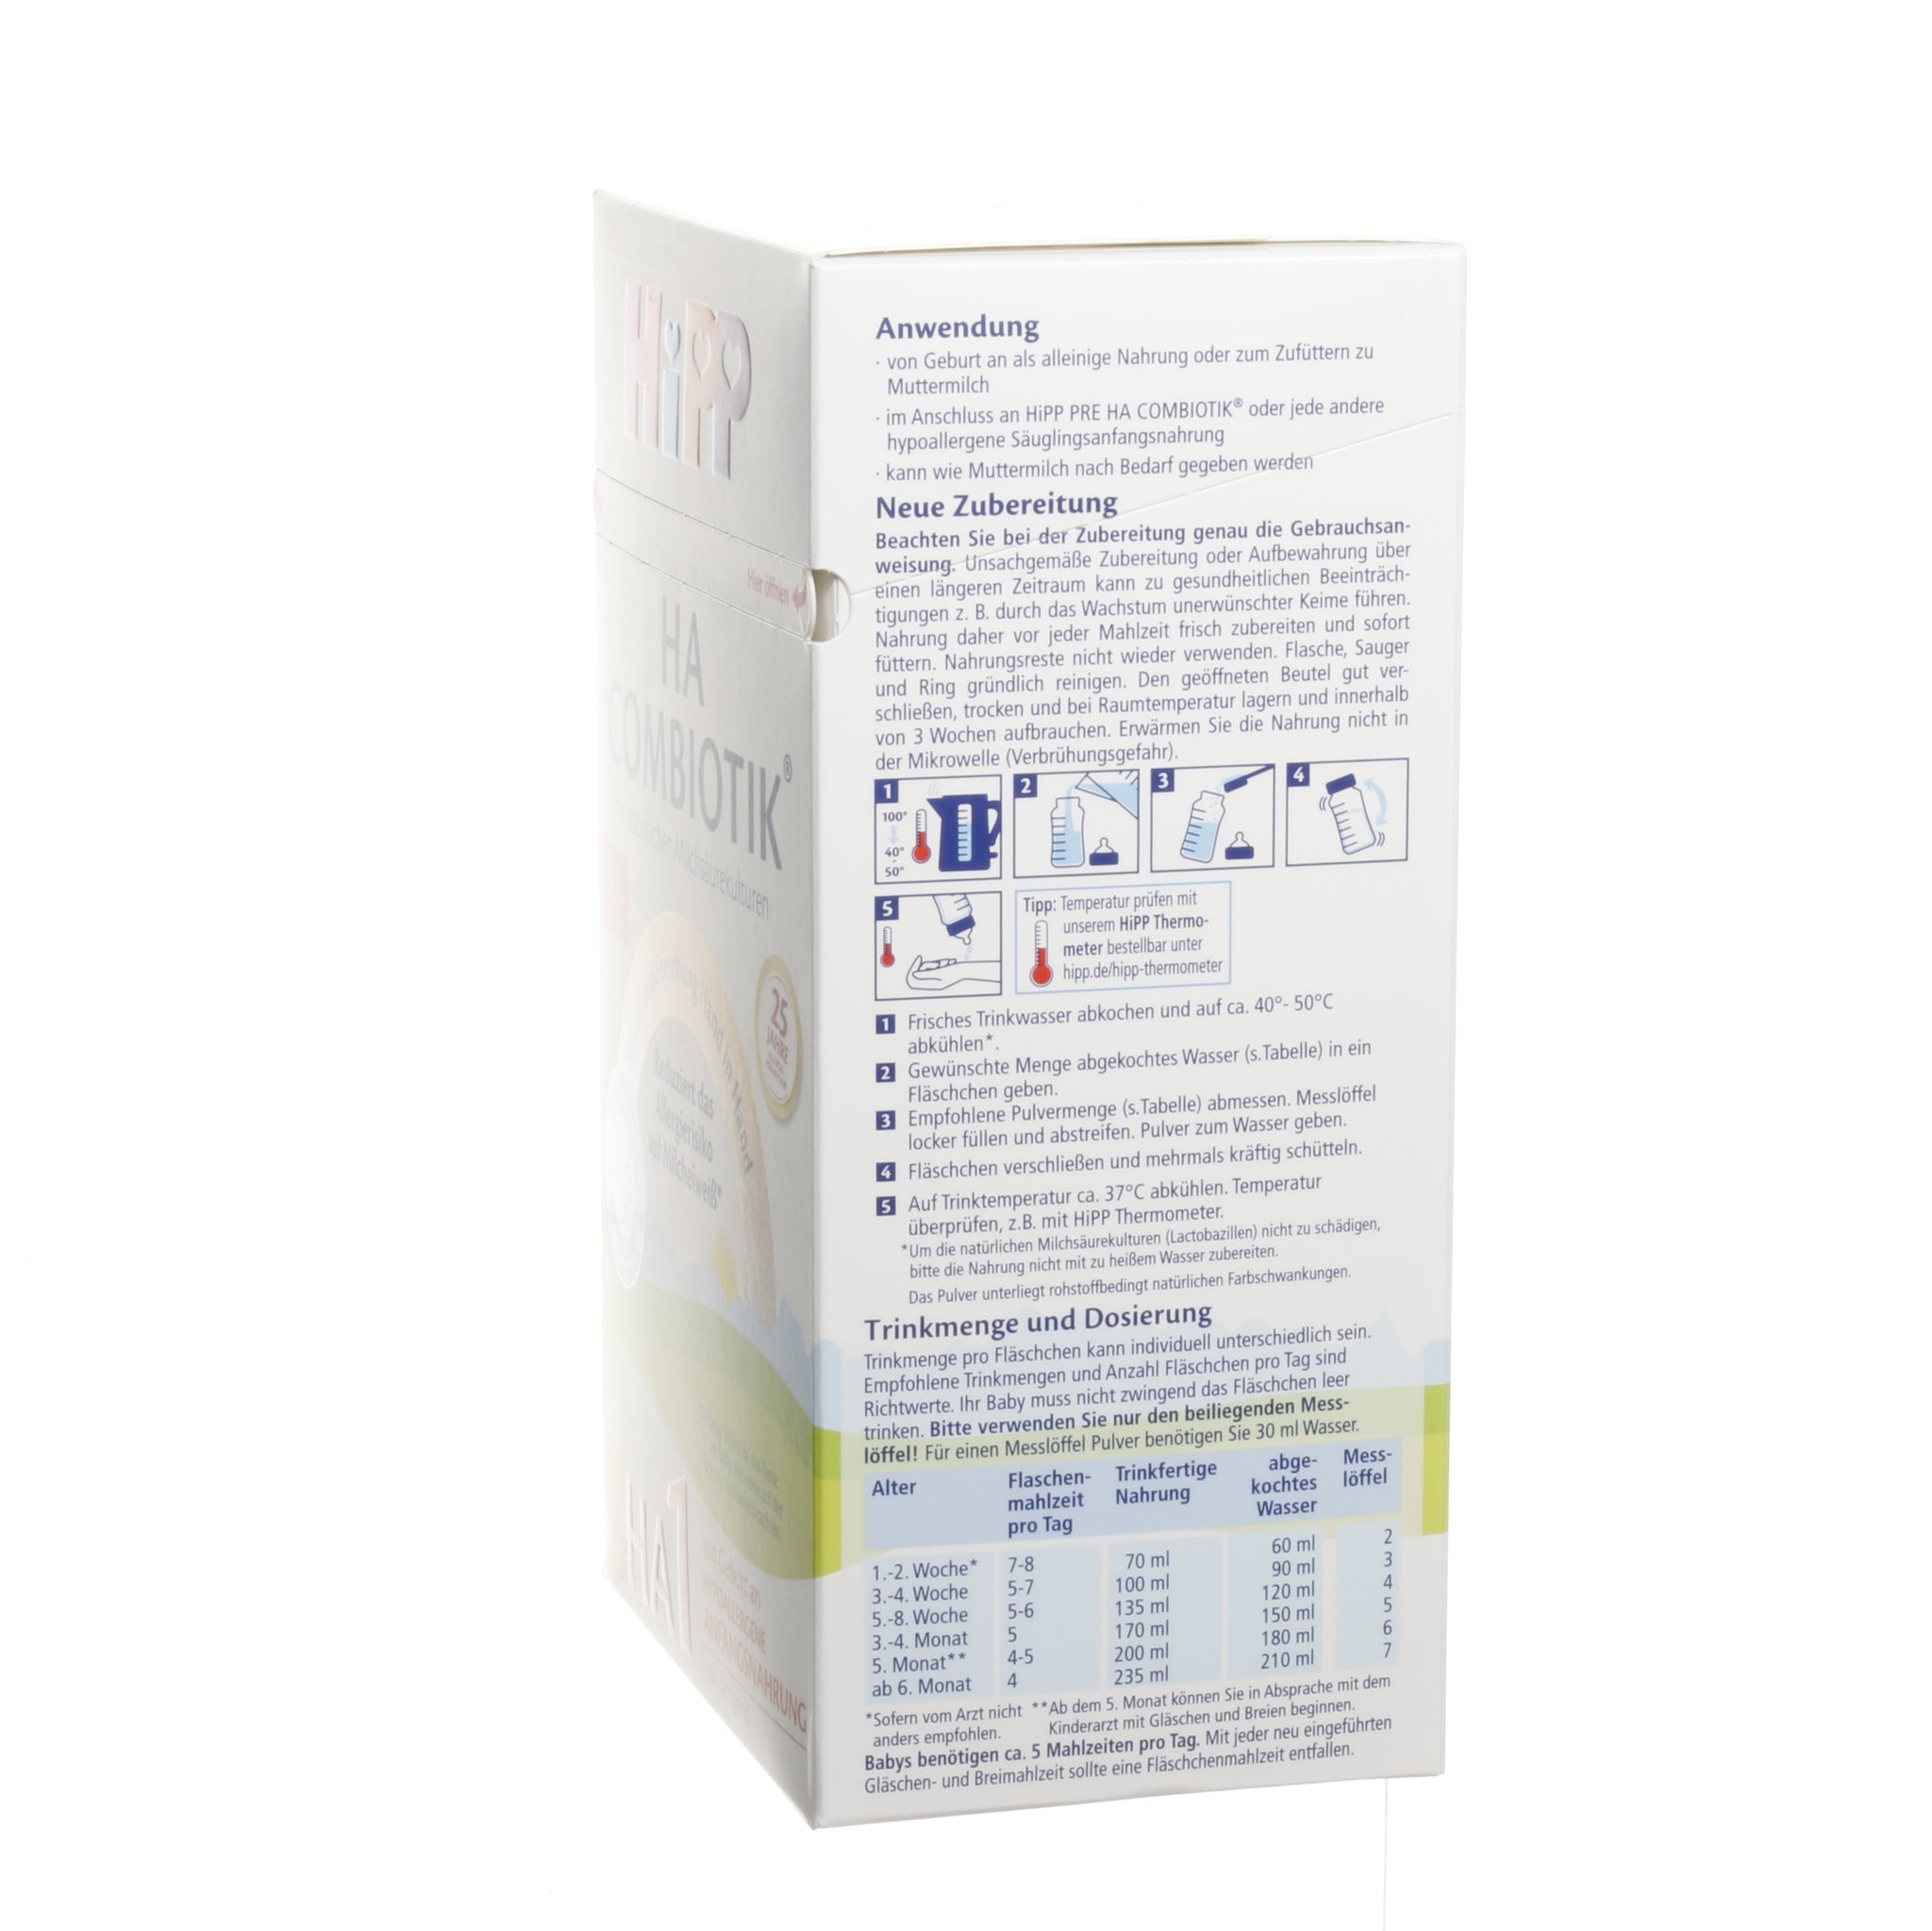 32x Hipp 3 Organic Combiotics, 600g - Nutritional Baby Formula –  firstorganicbaby